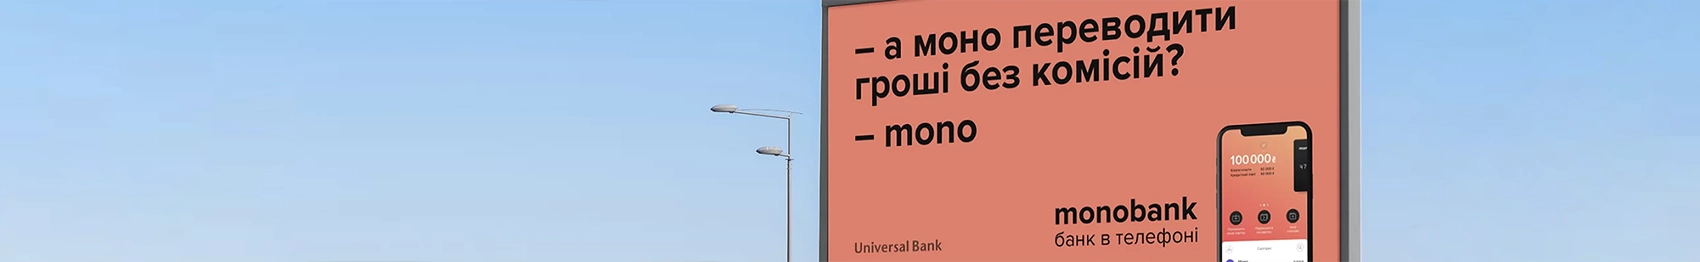 ad monobank